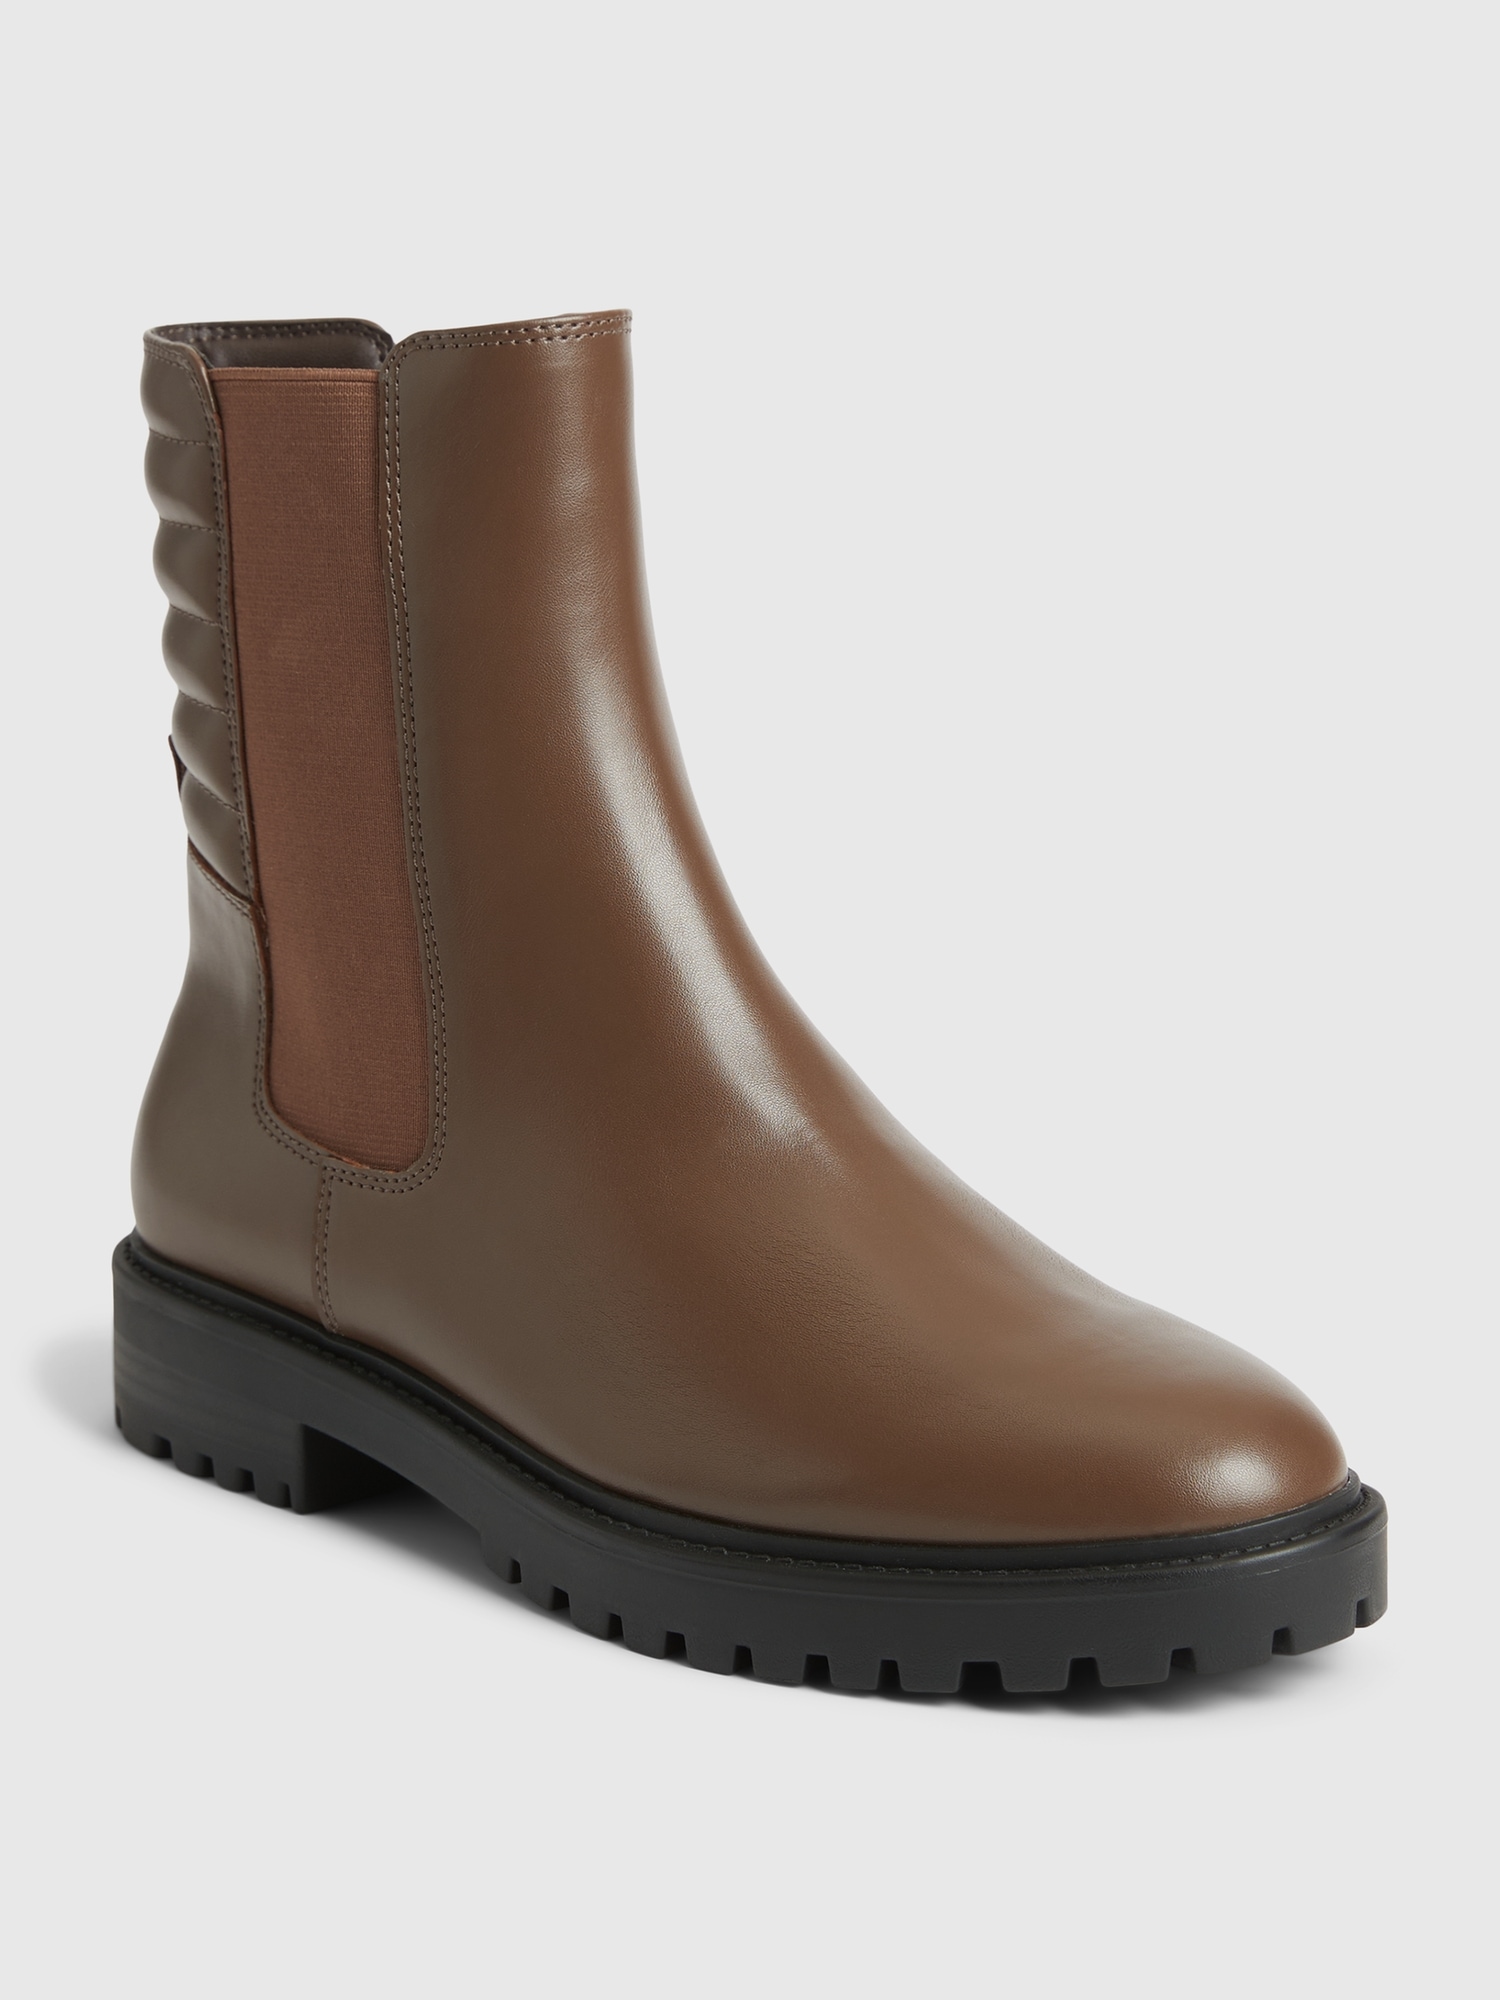 Gap Chelsea Boots brown. 1